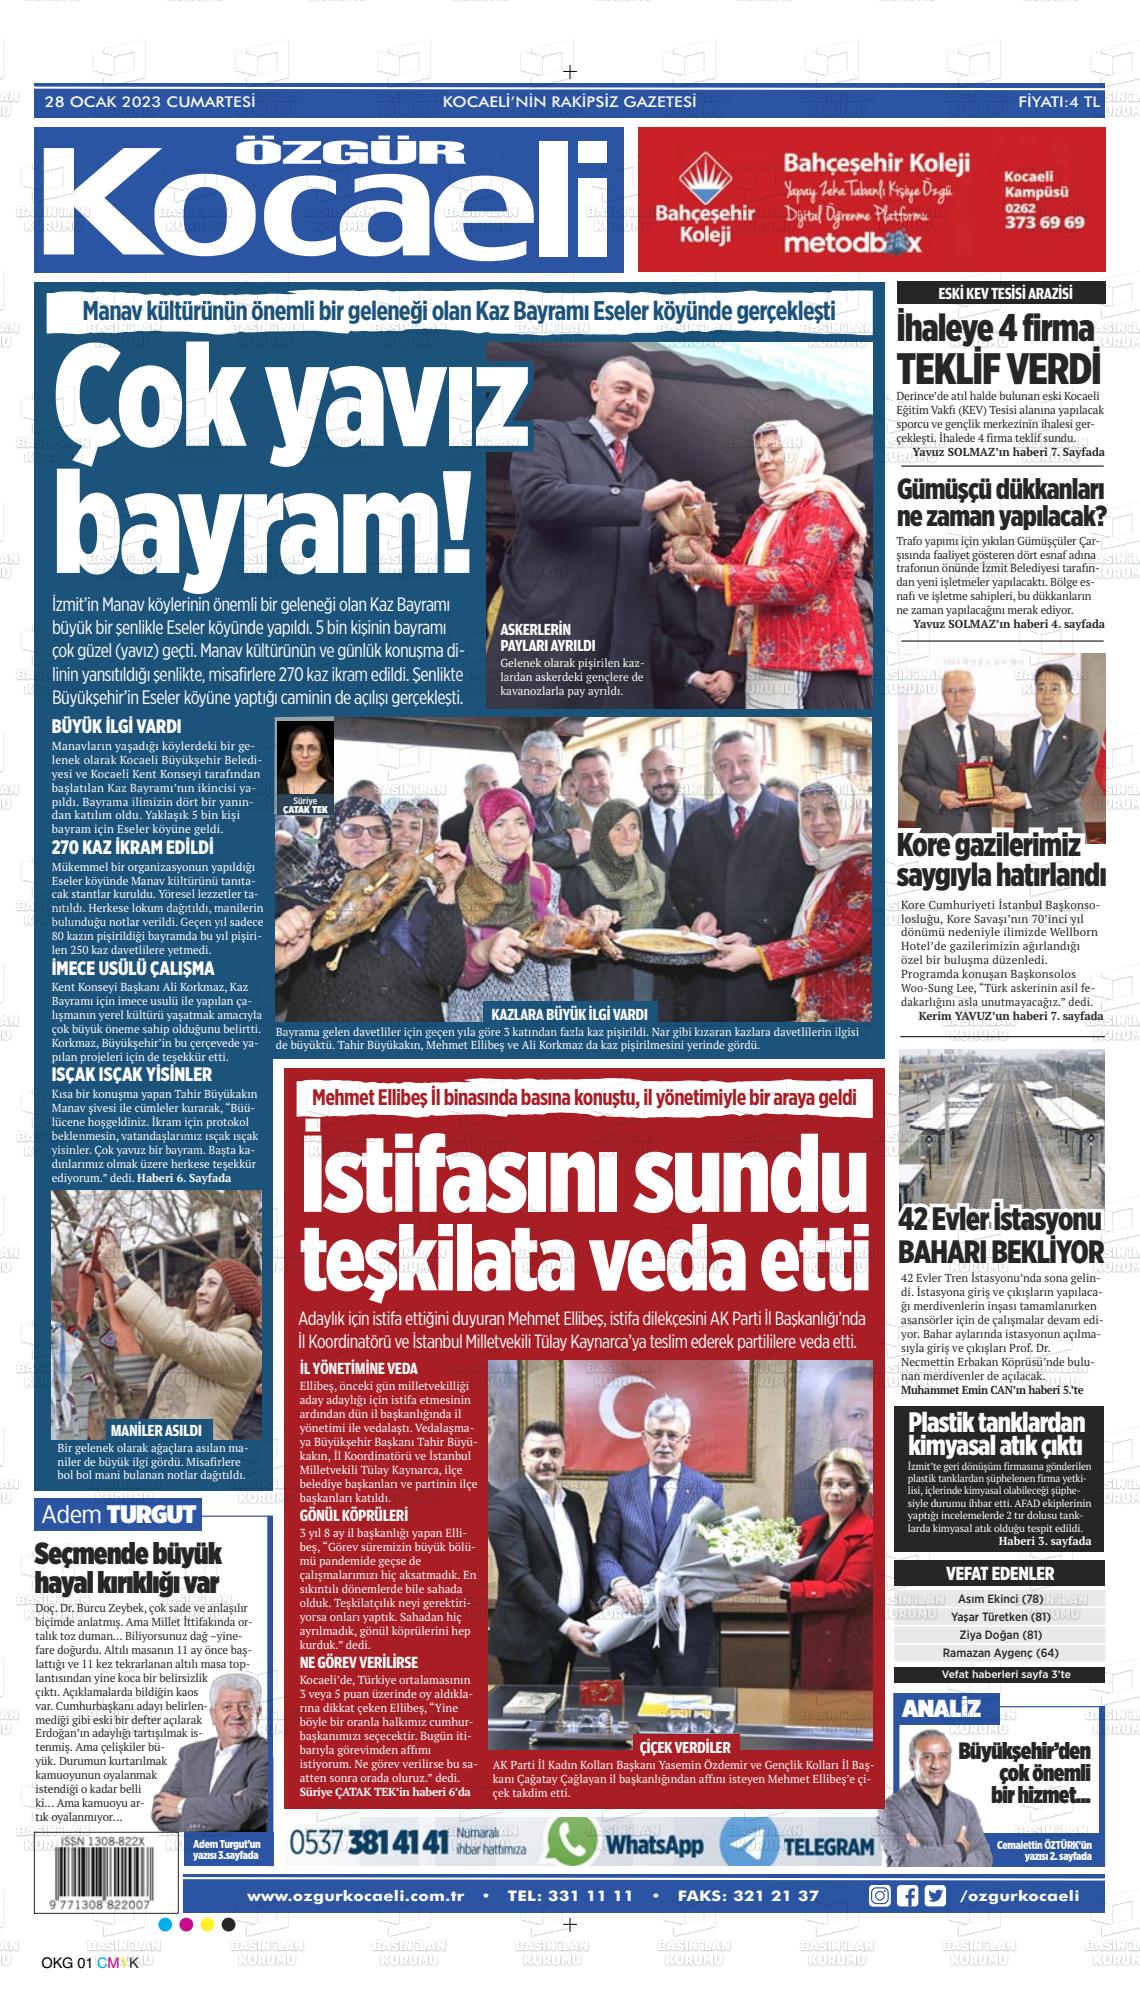 28 Ocak 2023 Özgür Kocaeli Gazete Manşeti